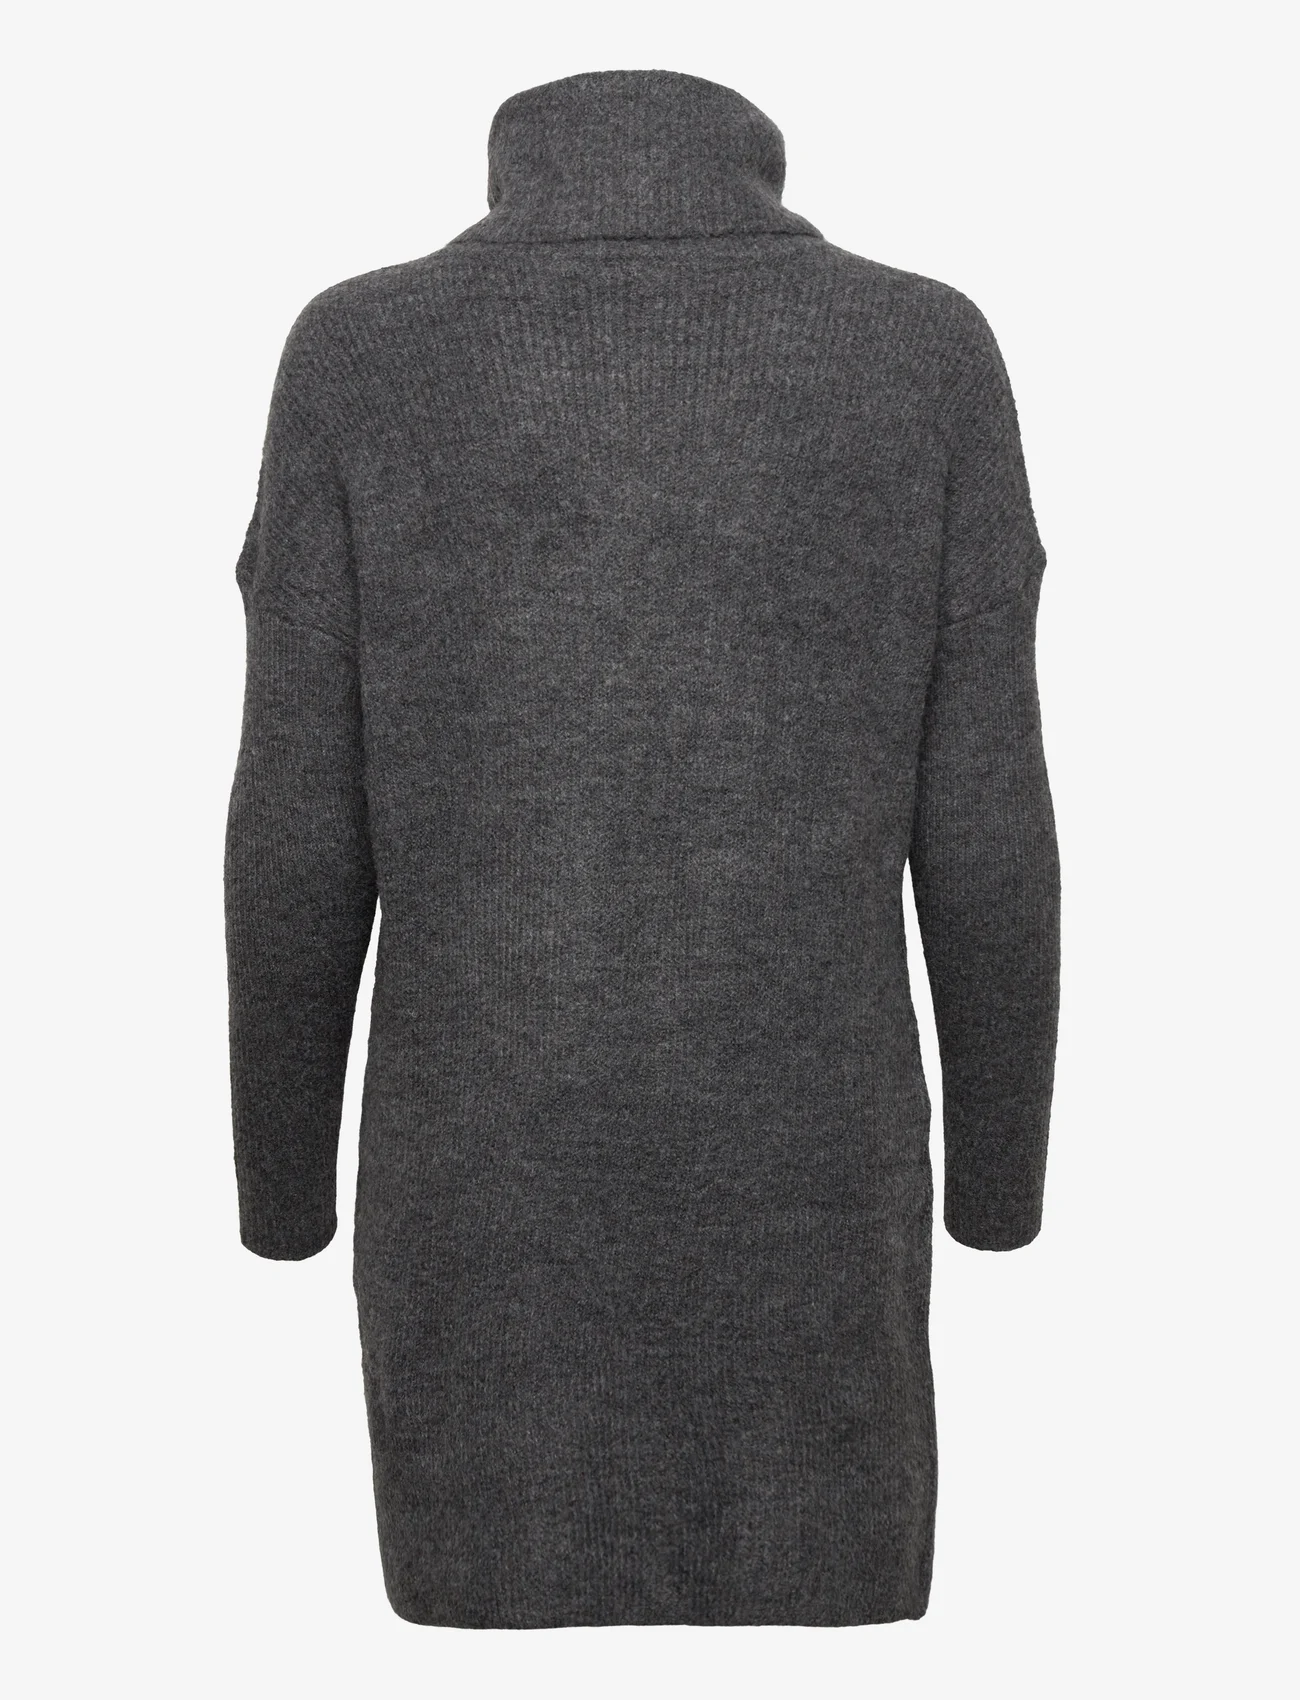 ONLY - ONLJANA L/S COWLNCK DRESS  WOOL KNT NOOS - lowest prices - dark grey melange - 1